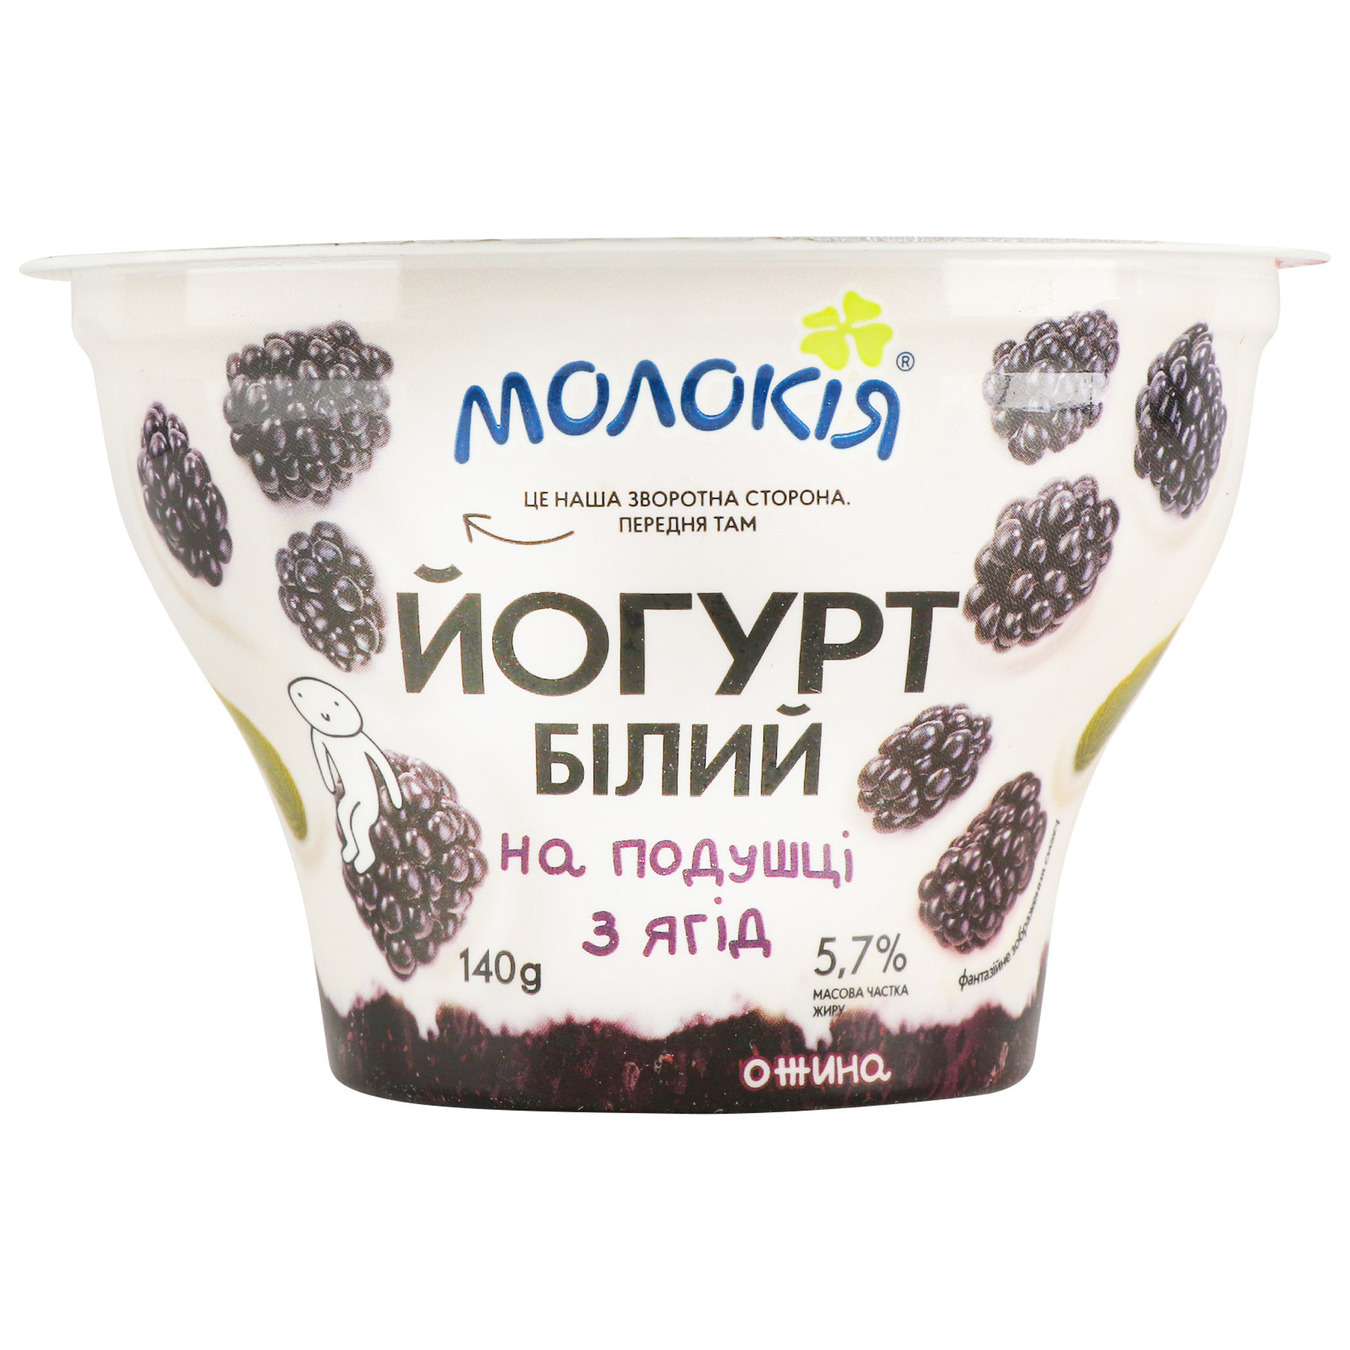 Molokiya white yogurt on a berry pillow 5.7% 140g